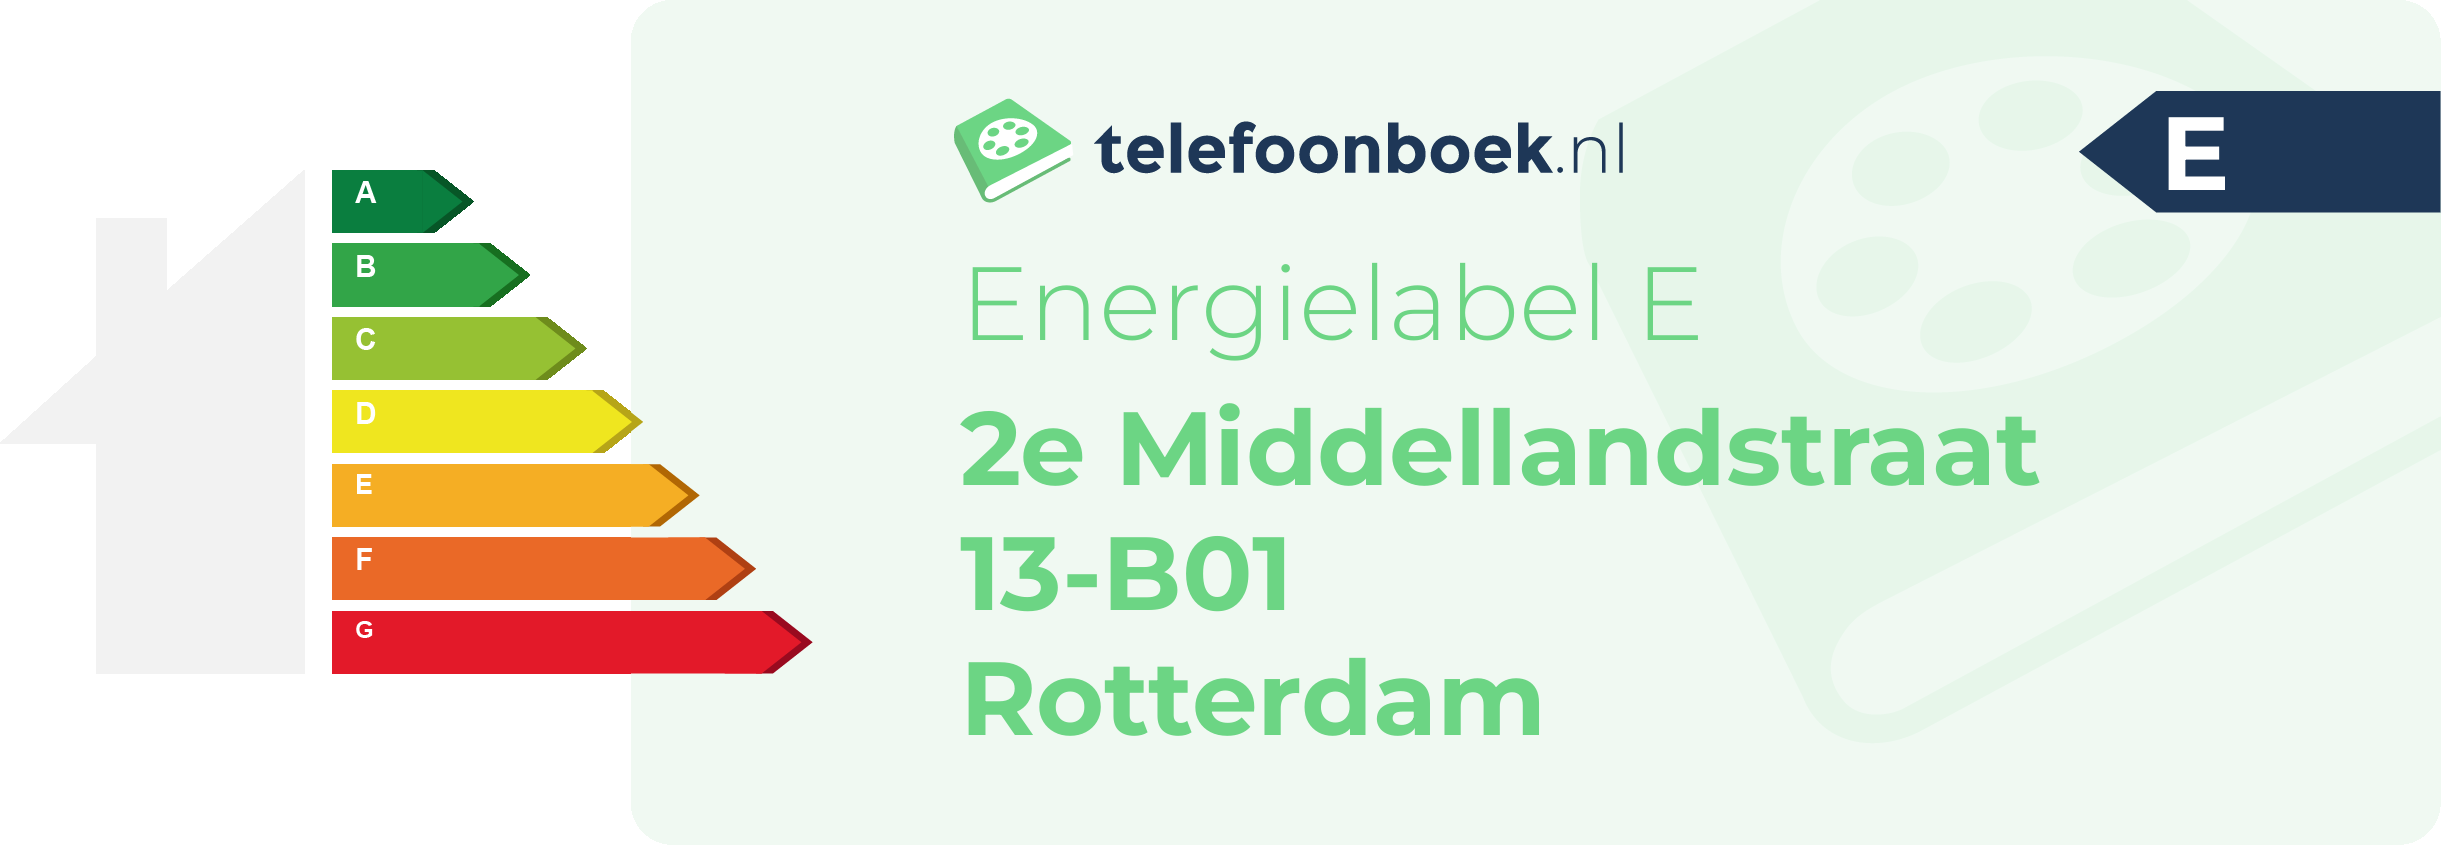 Energielabel 2e Middellandstraat 13-B01 Rotterdam